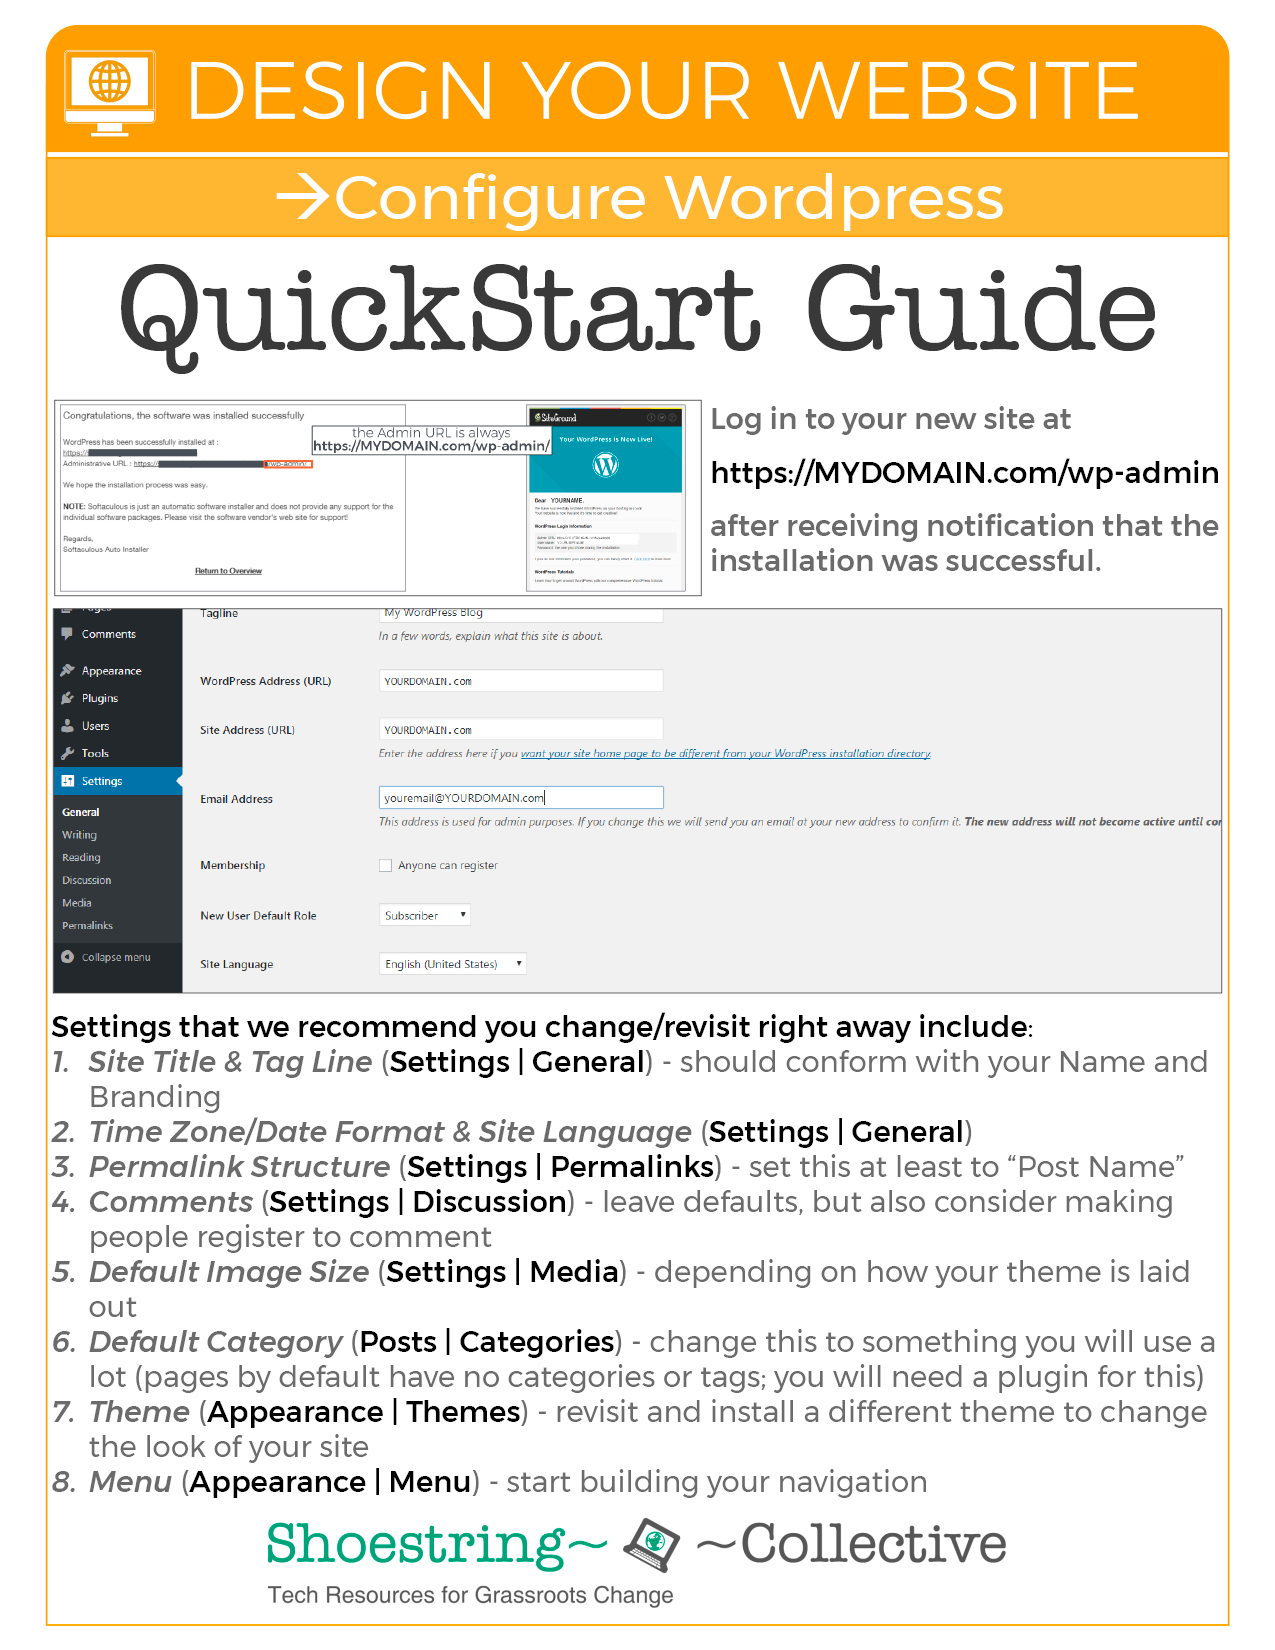 QuickStart Guide: How to Configure WordPress